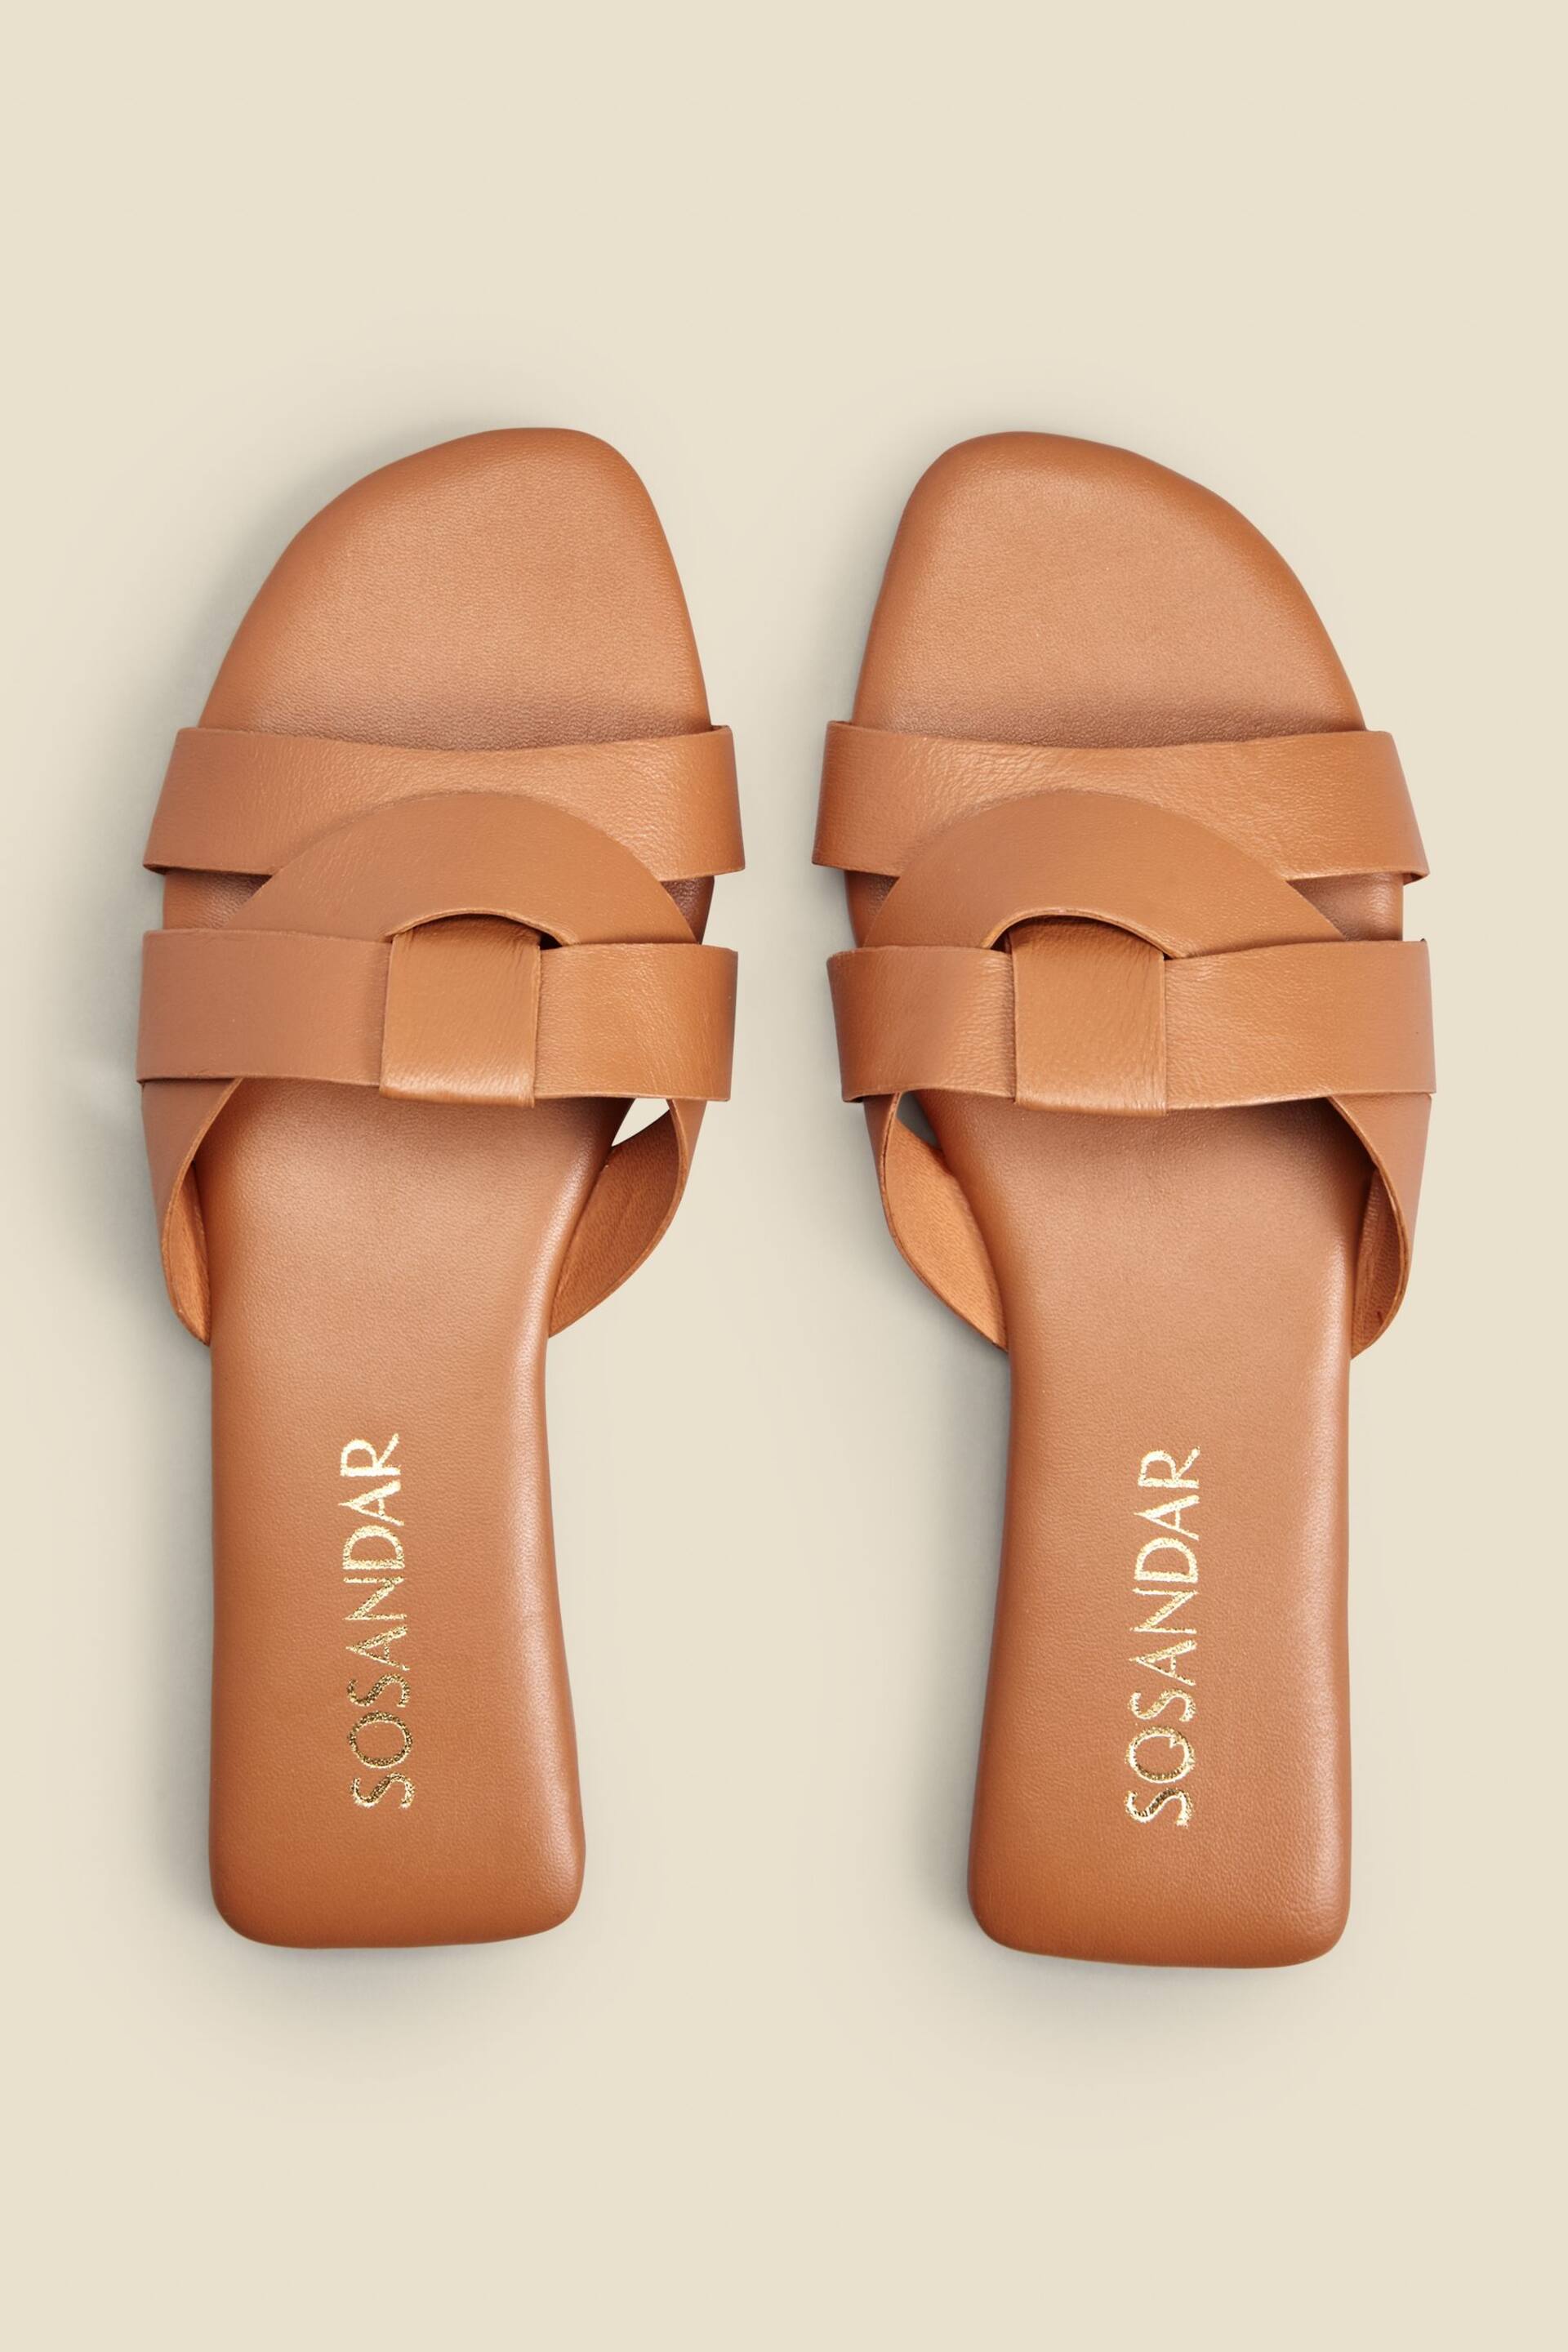 Sosandar Brown Cross Strap Flat Leather Mule Sandals - Image 2 of 3